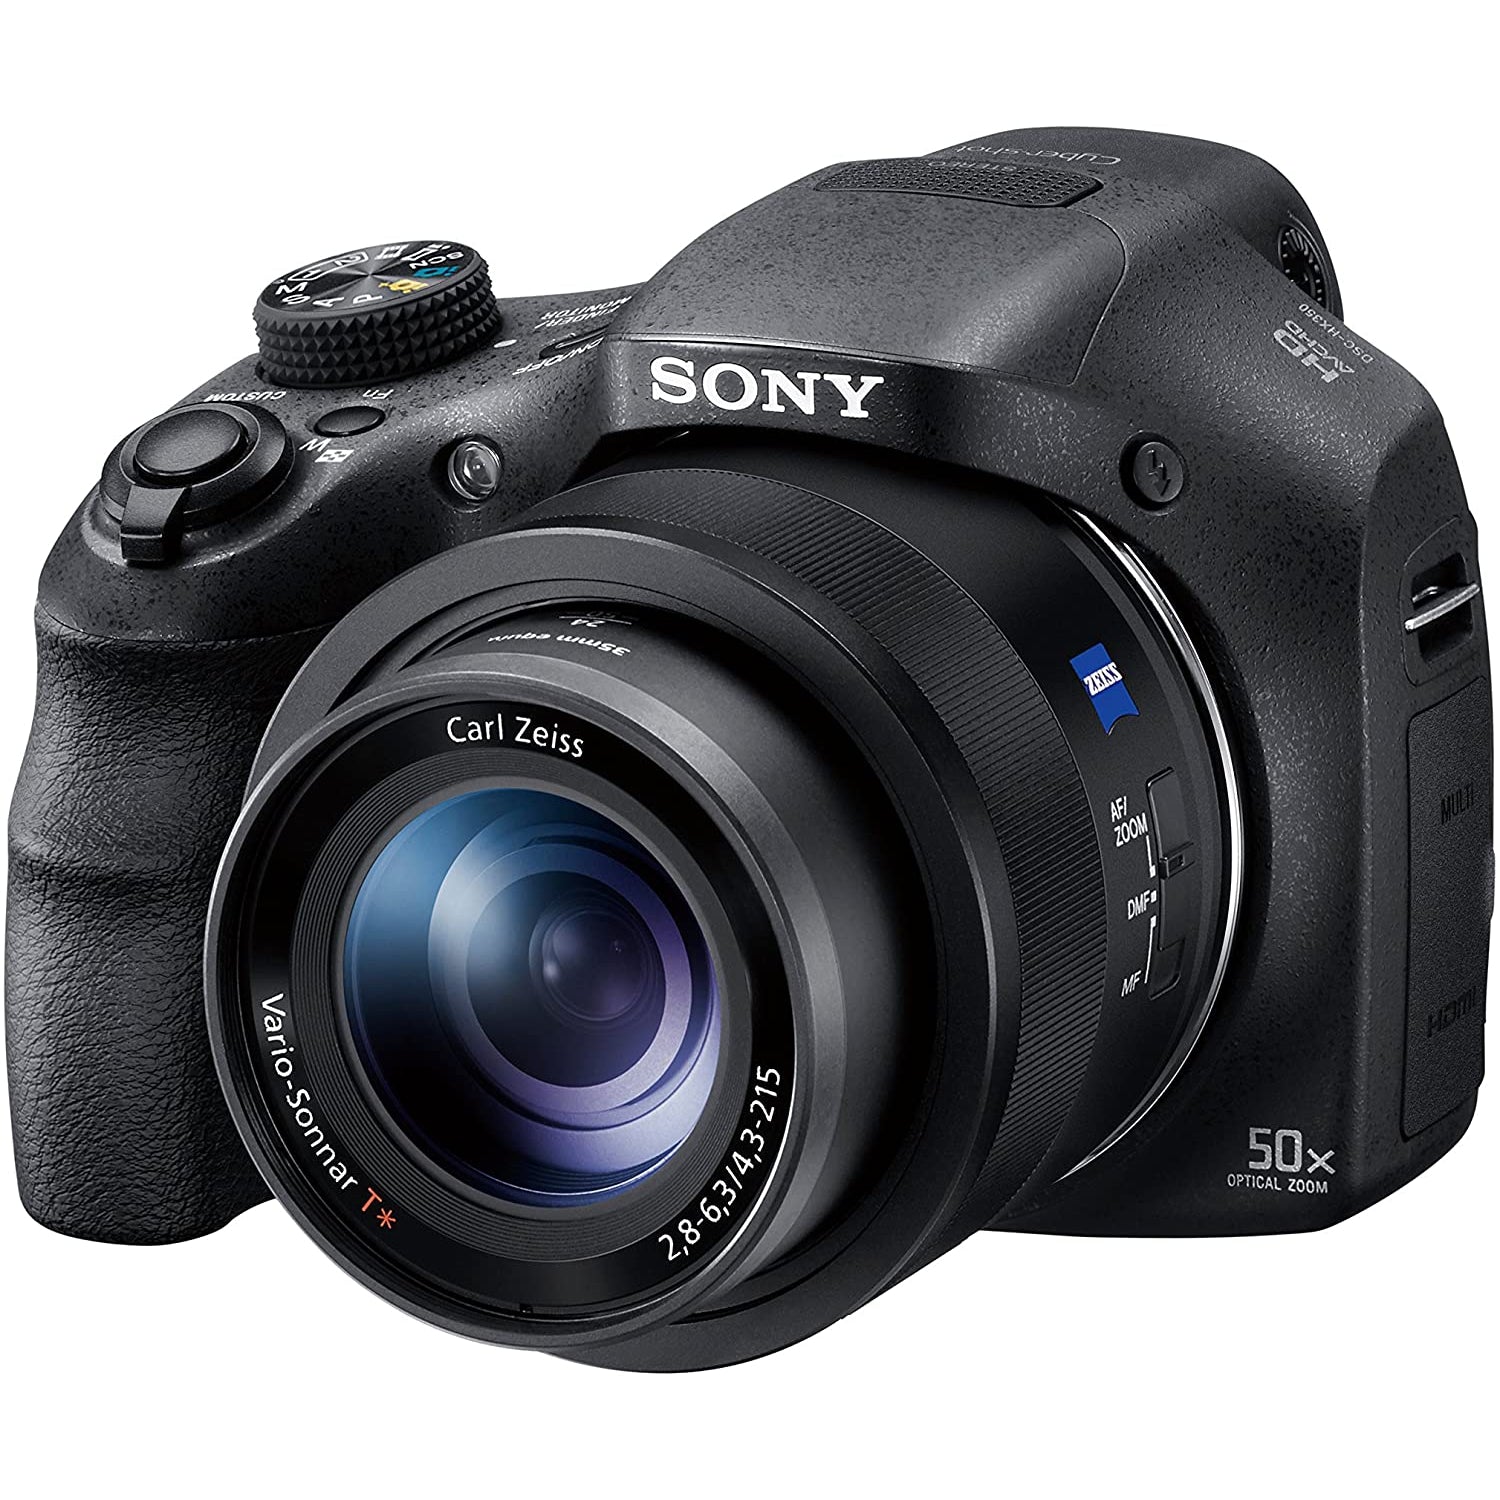 Sony DSC-HX350 Digital Compact Camera - Black